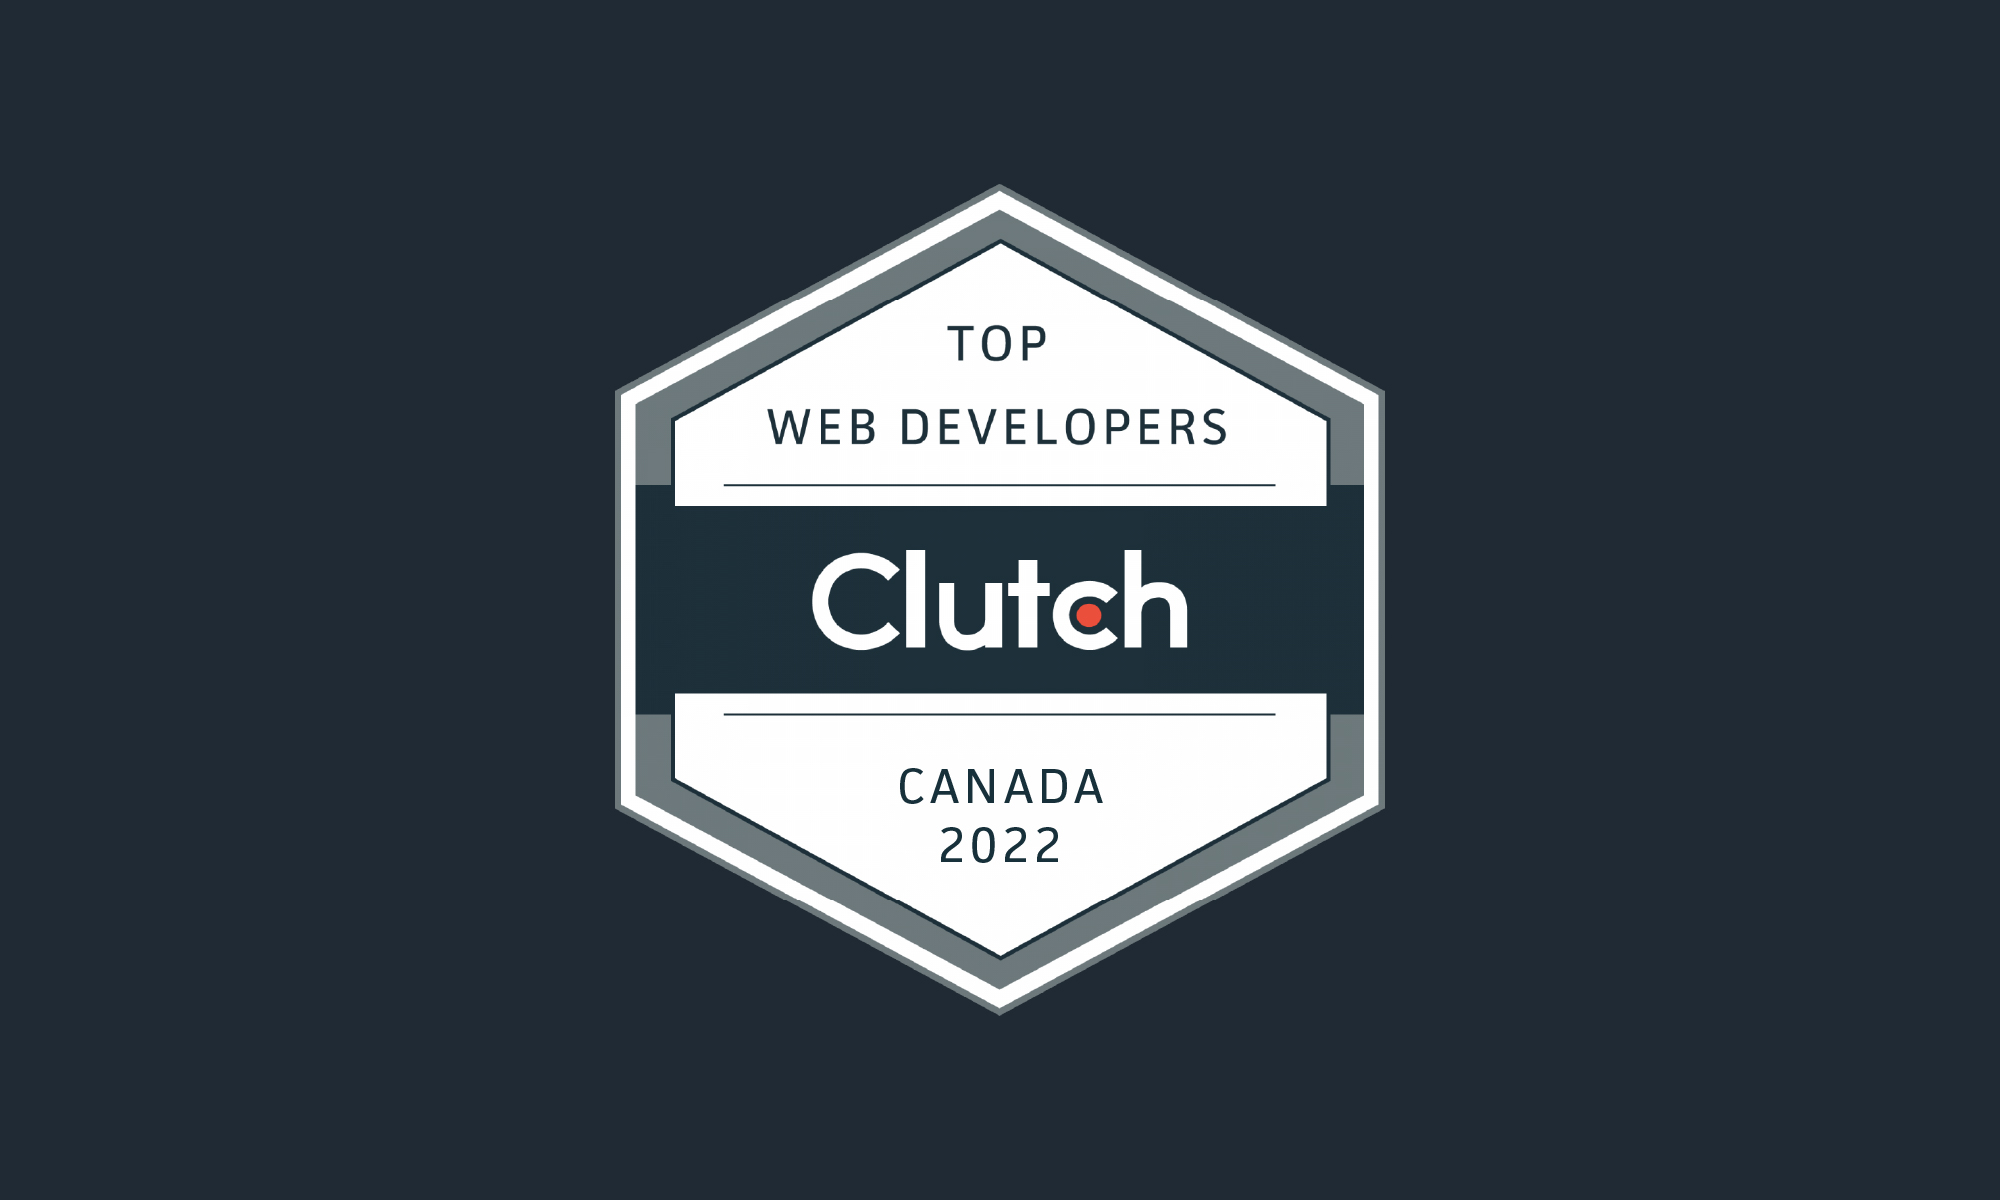 Symetris is one of Canada’s Best Web Development Companies